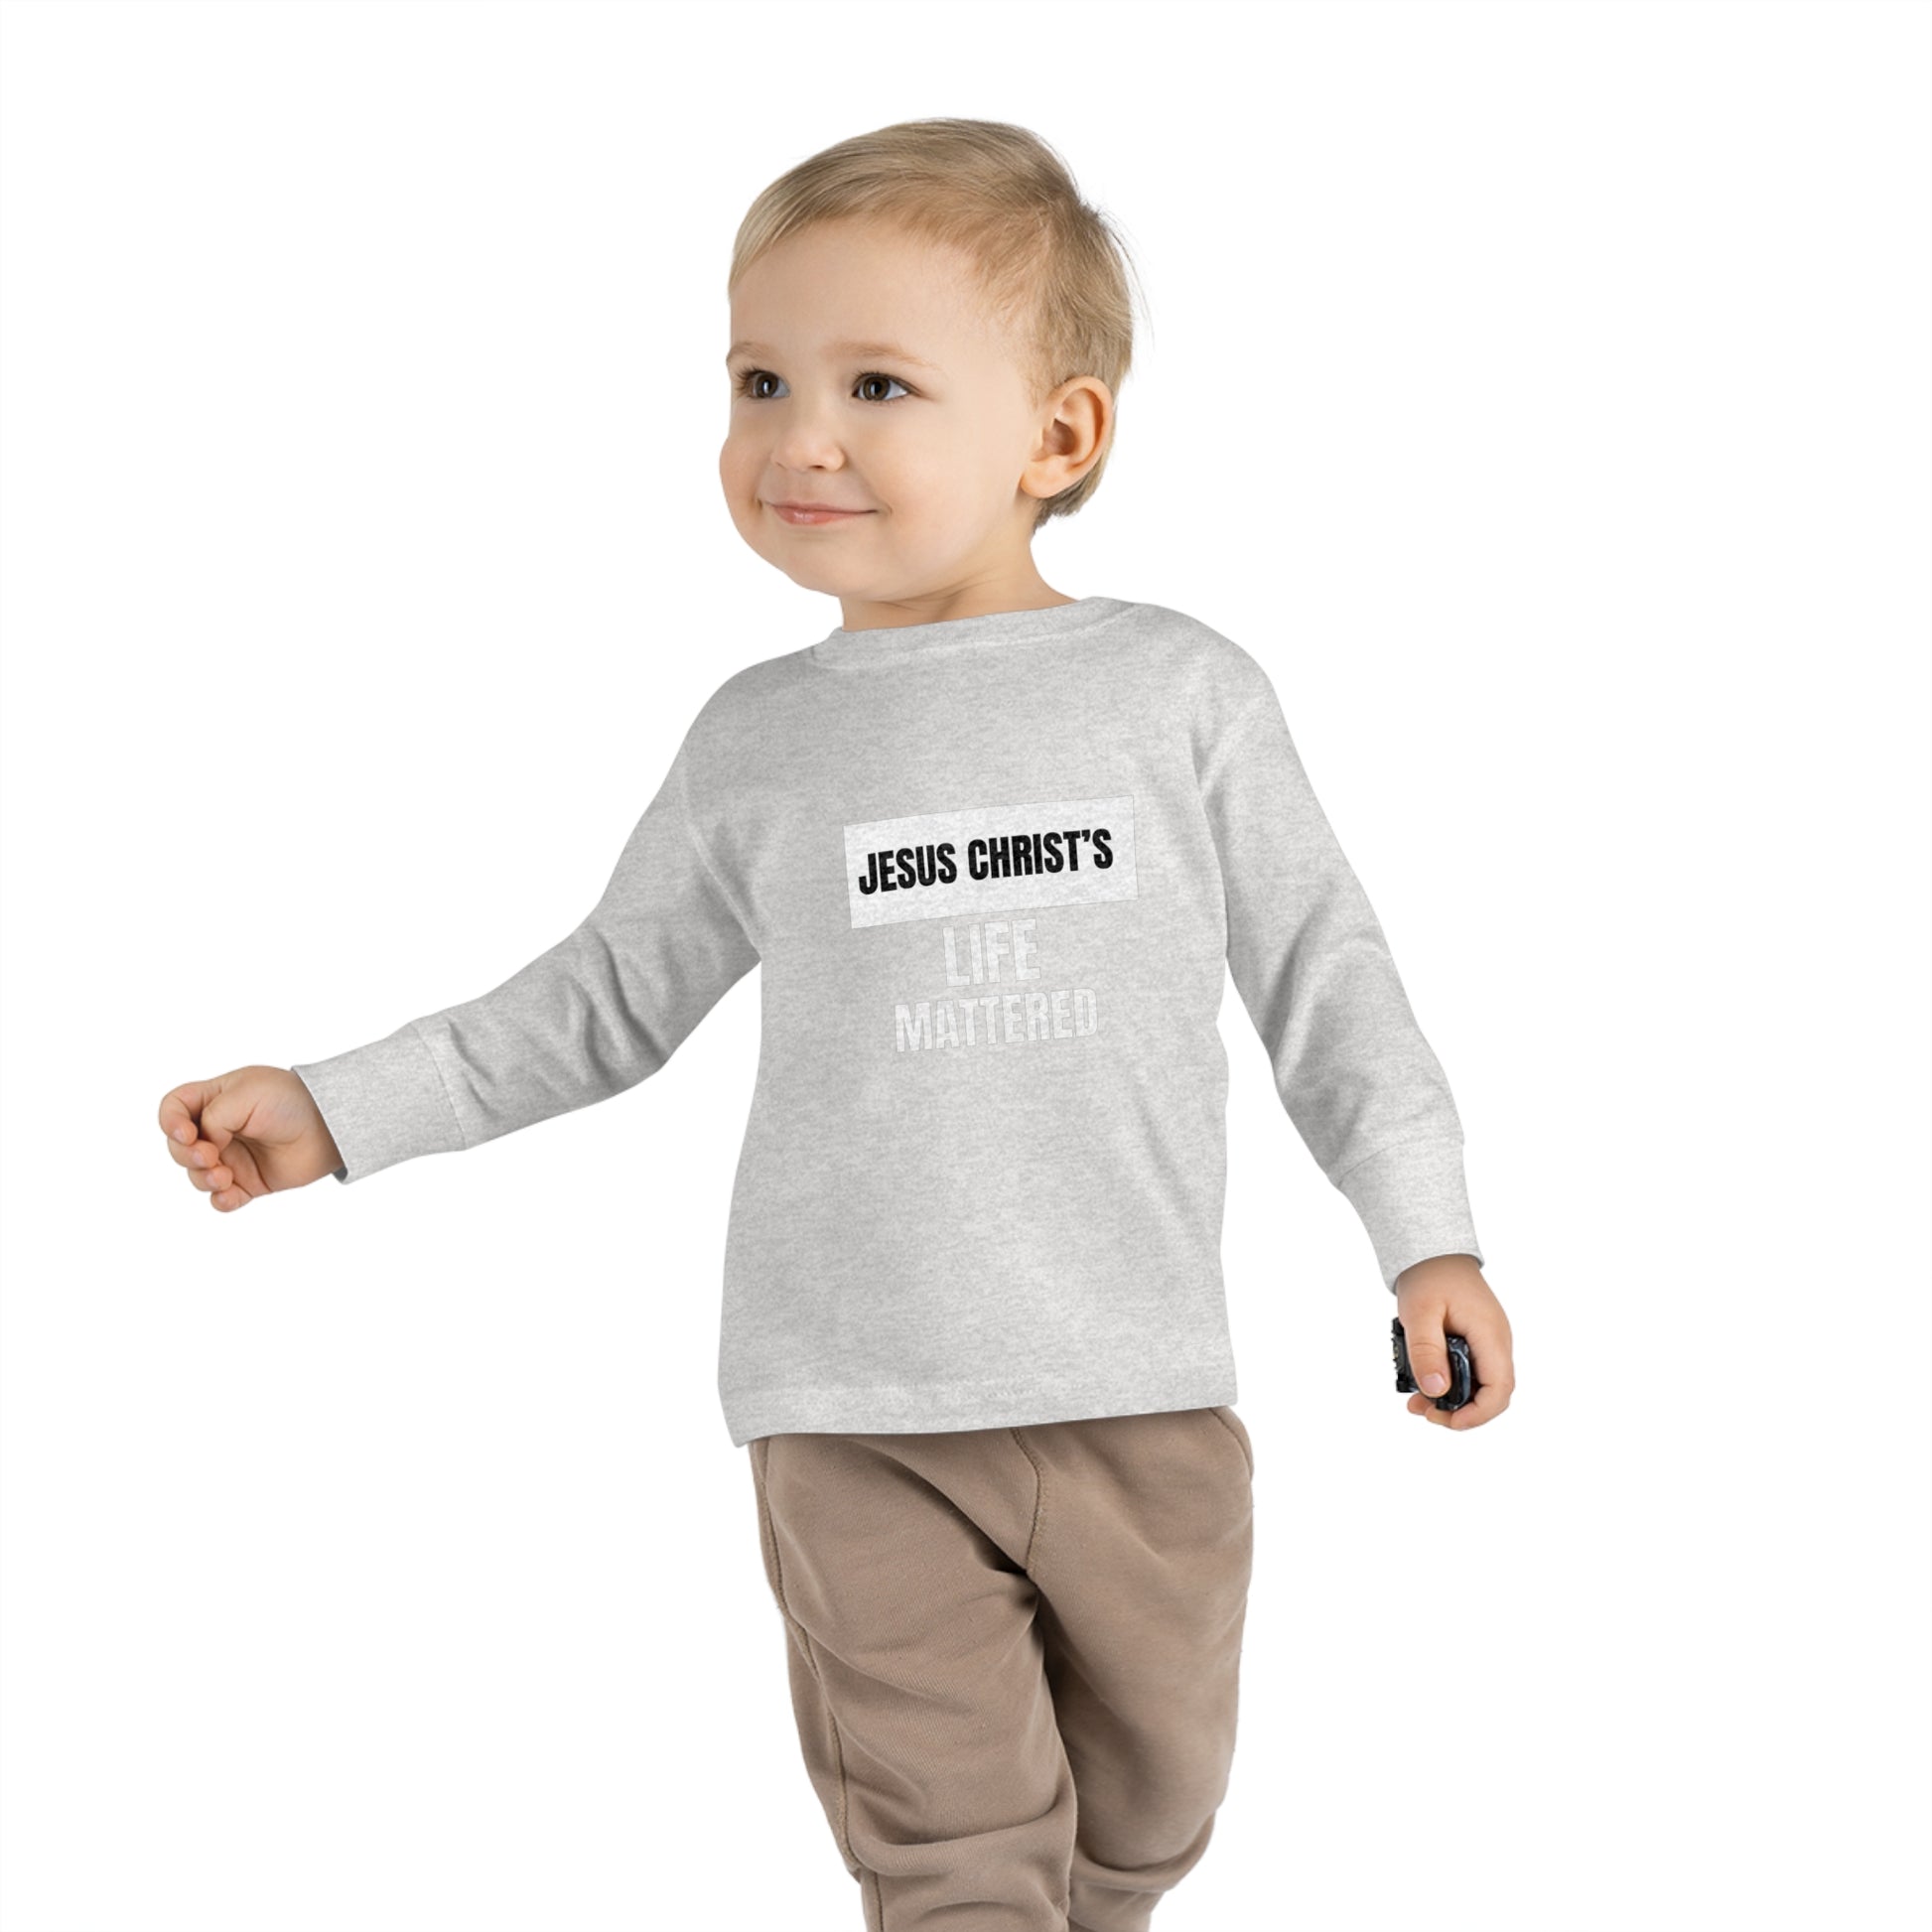 Jesus Christ's Life Mattered Toddler Christian Sweatshirt Printify